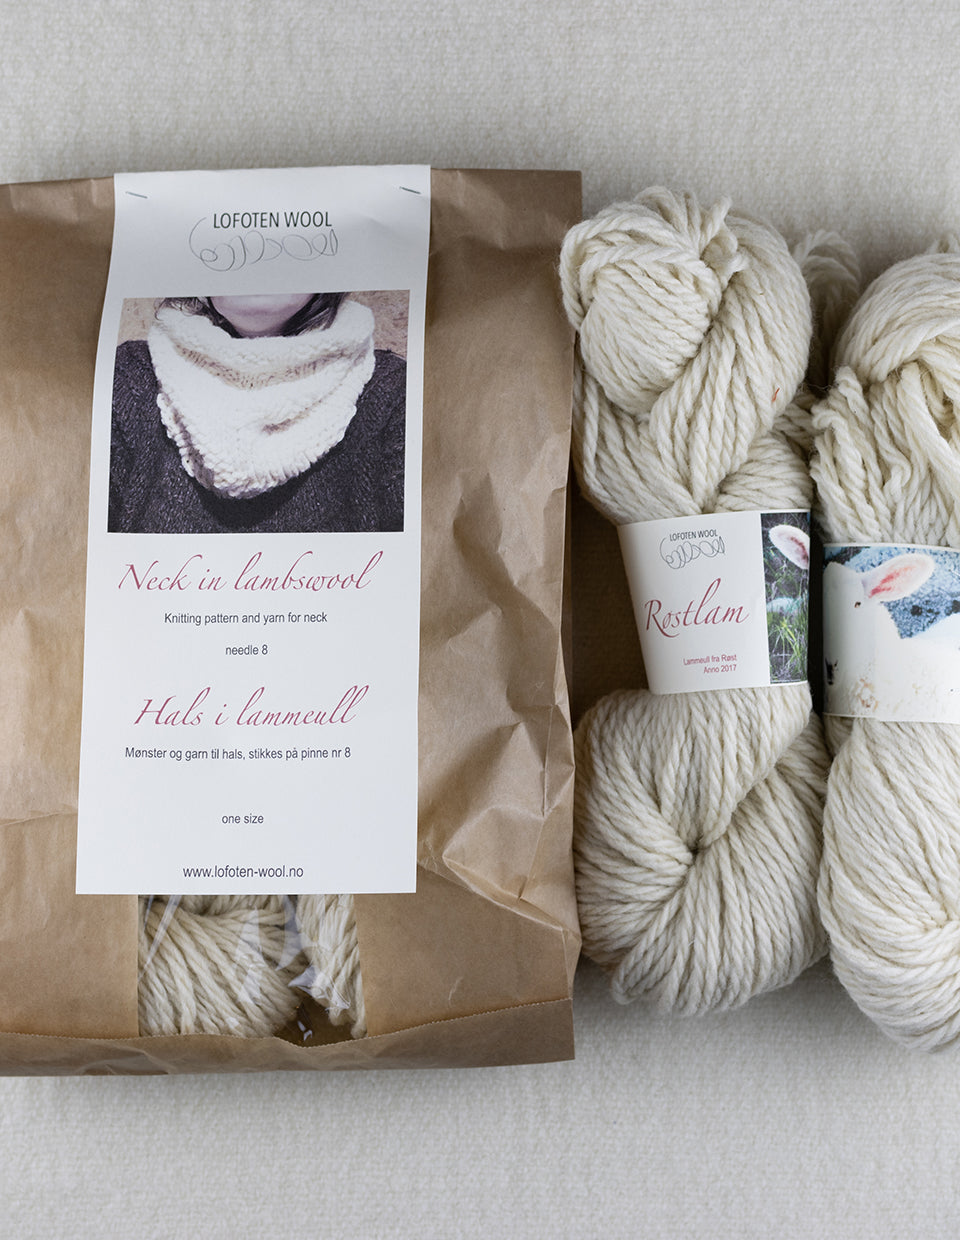 Neck cowl in lambswool, knitting kit (NORWEGIAN ONLY)